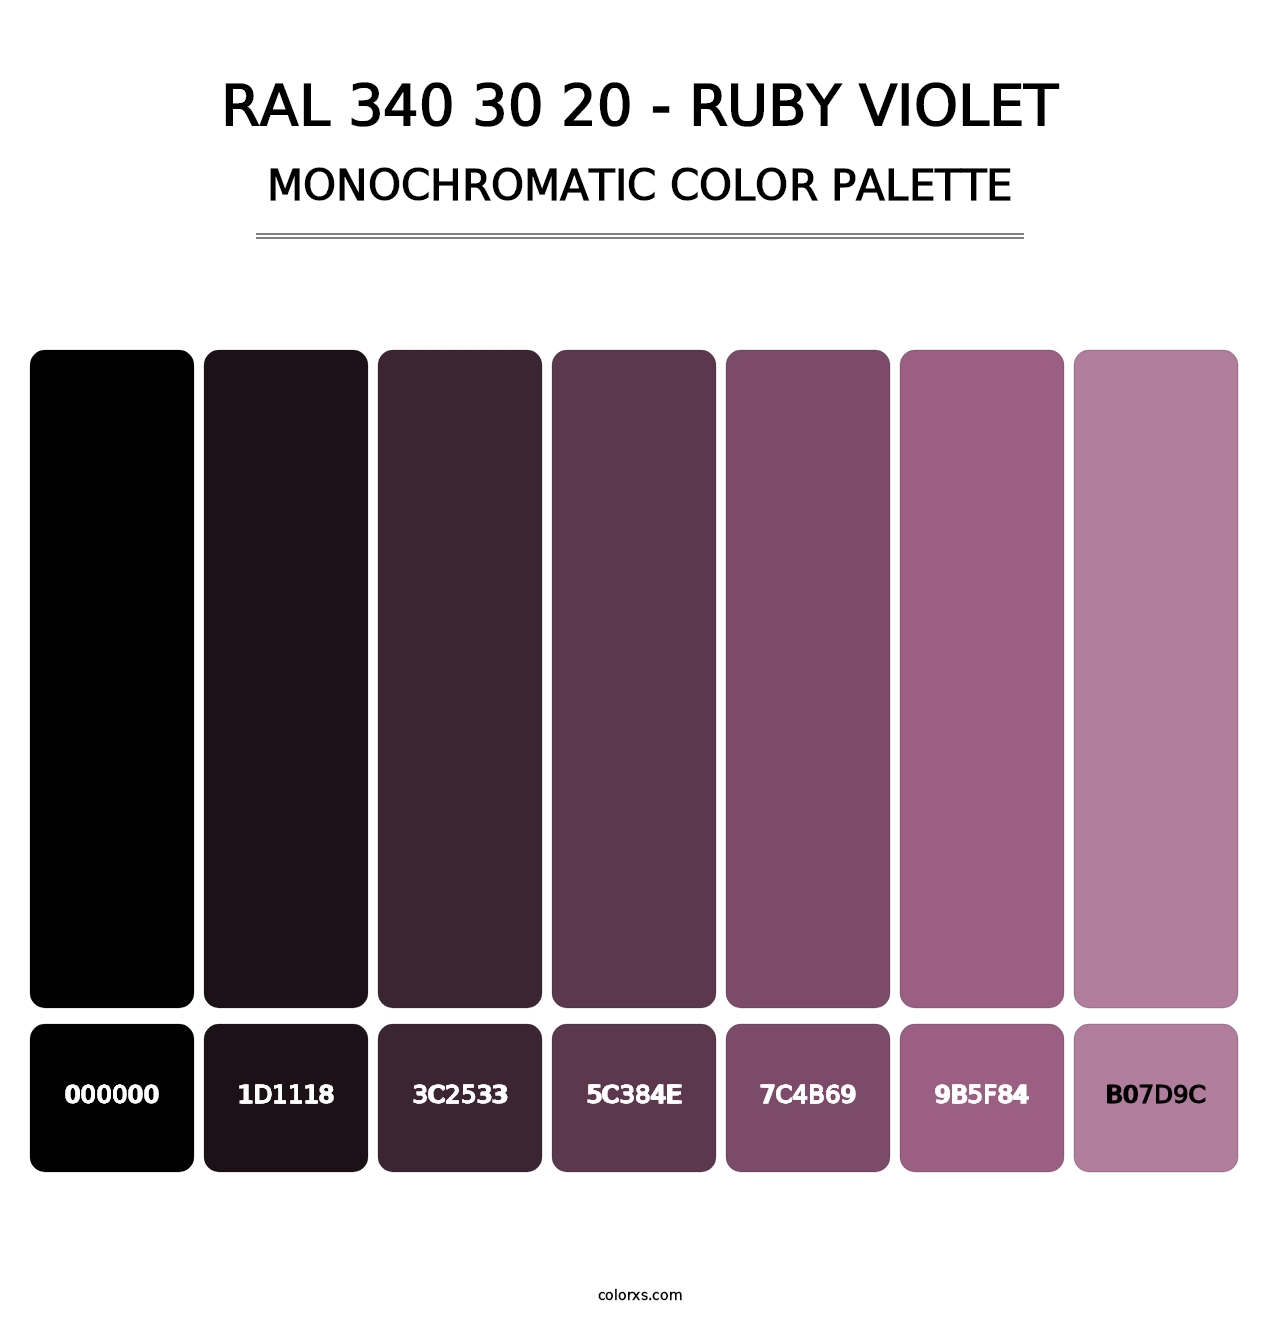 RAL 340 30 20 - Ruby Violet - Monochromatic Color Palette